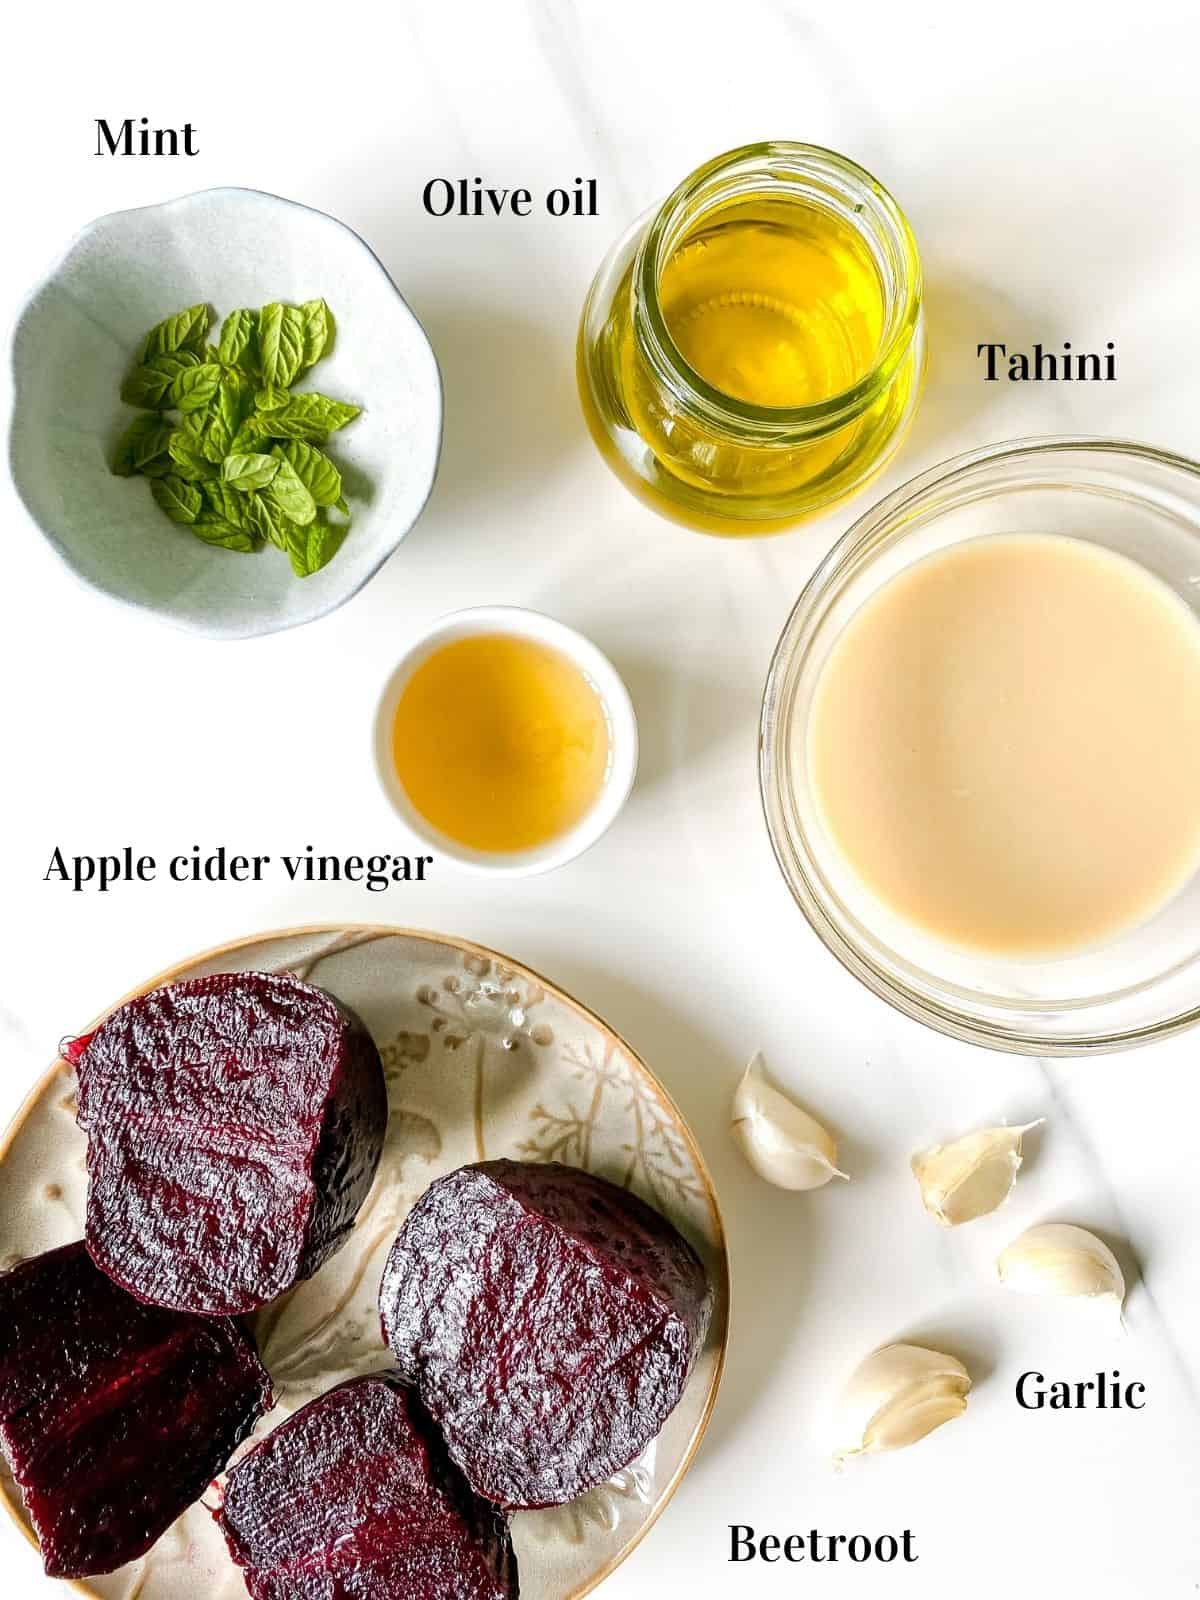 beetroot, tahini, garlic, olive oil, mint and apple cider vinegar.